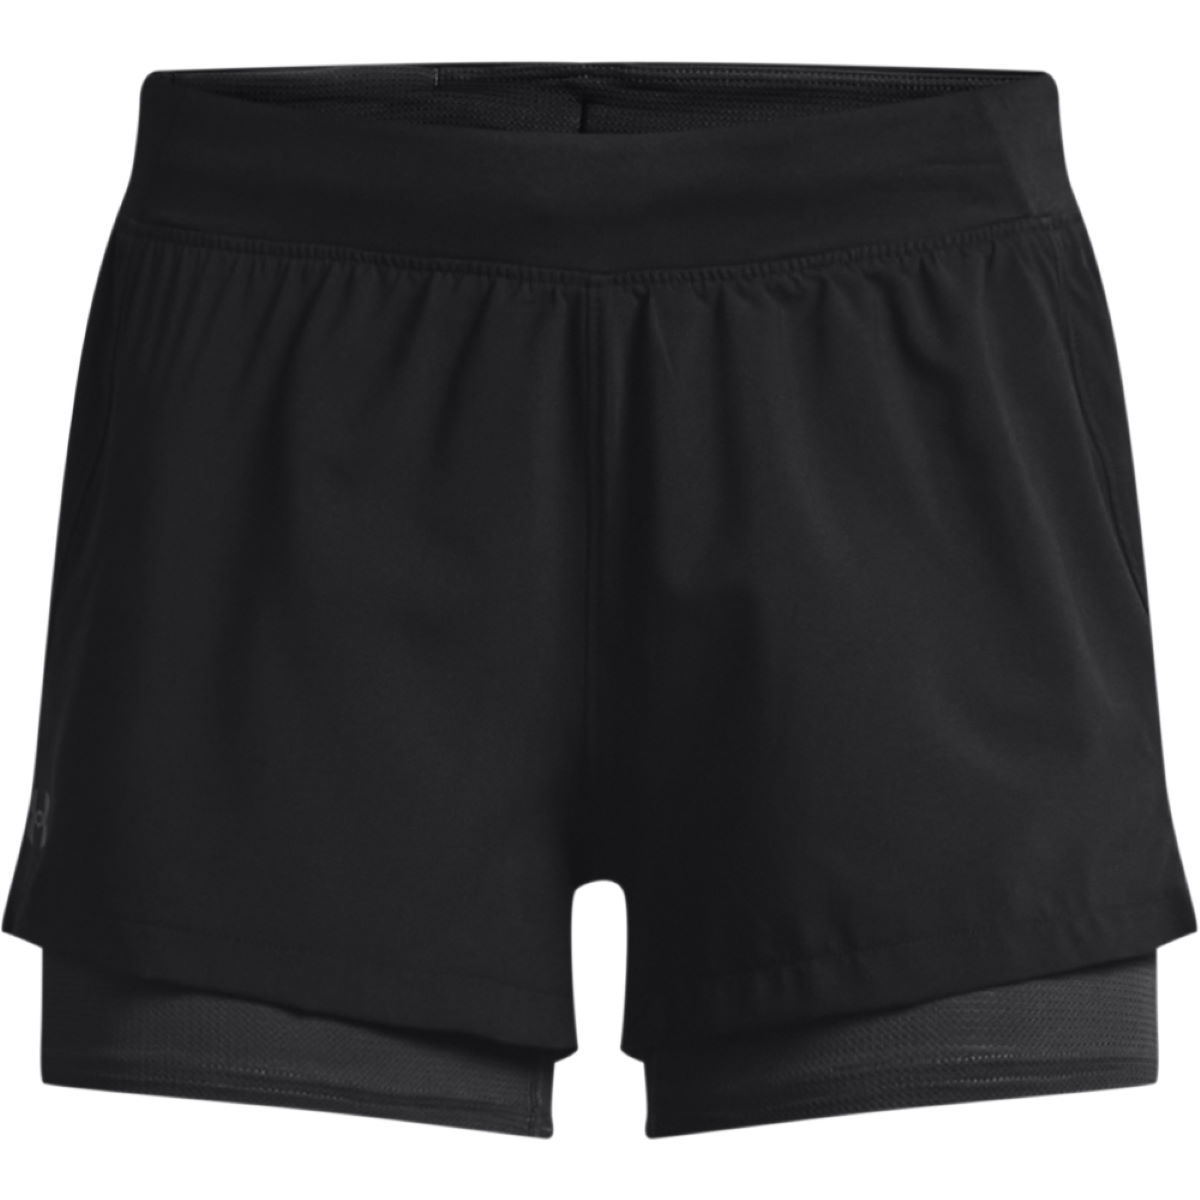 Pantalones cortos de running Under Armour IsoChill para mujer(2 en 1) - Pantalones cortos